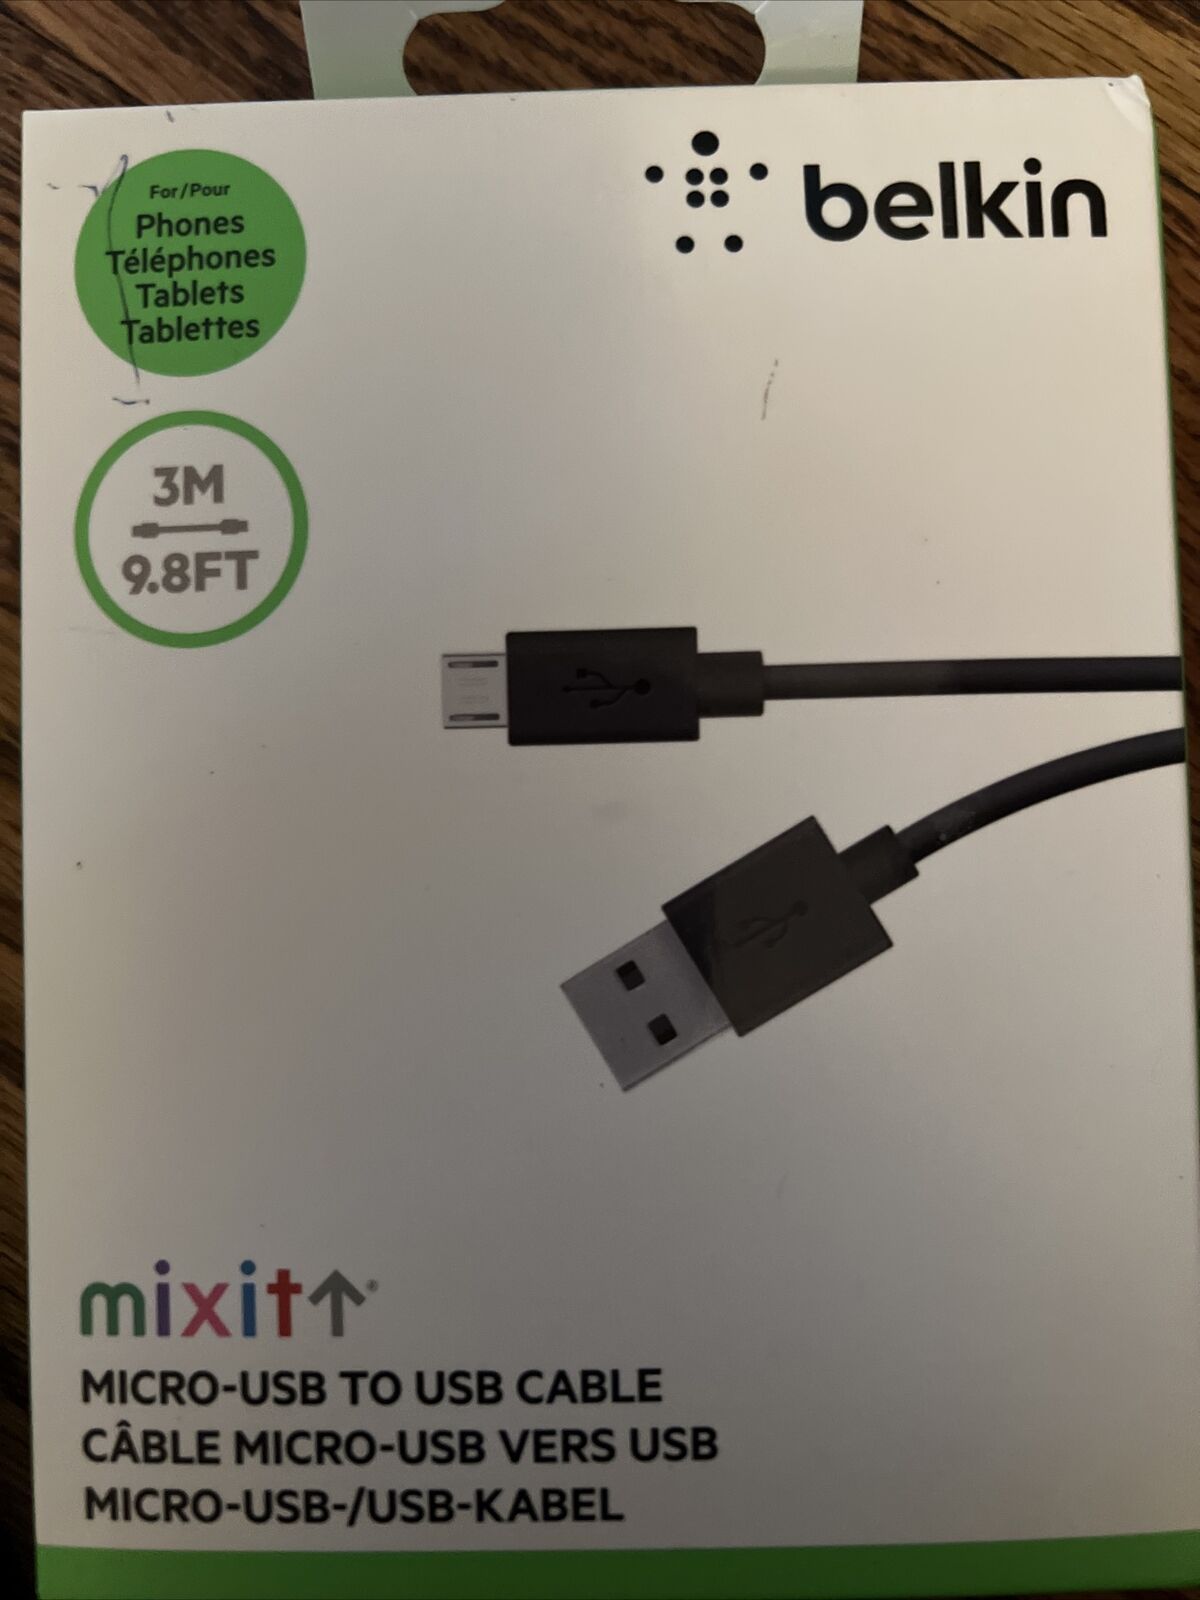 Belkin 9.8FT MIXIT Micro-USB to USB 2.0 Cable F2CU012bt3M-BLK - Black